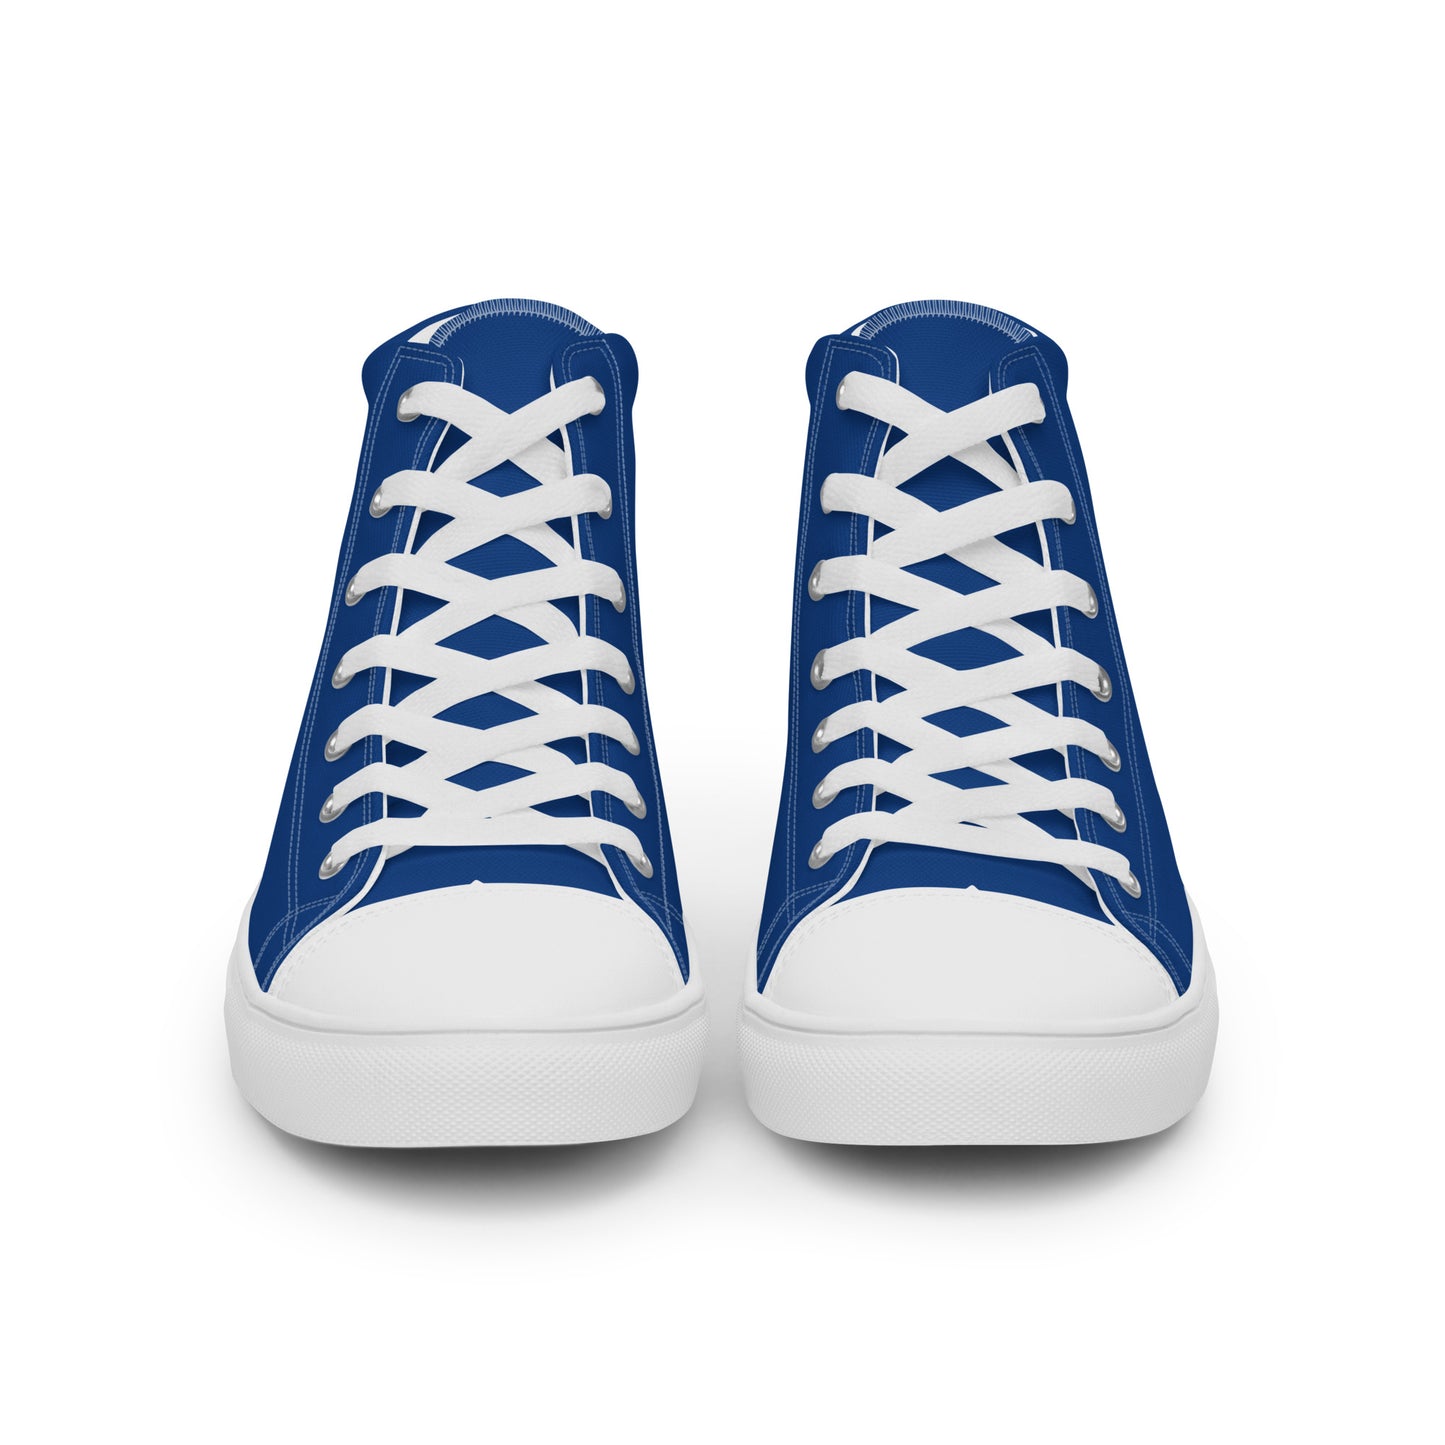 Costa Rica - Women - Blue - High top shoes